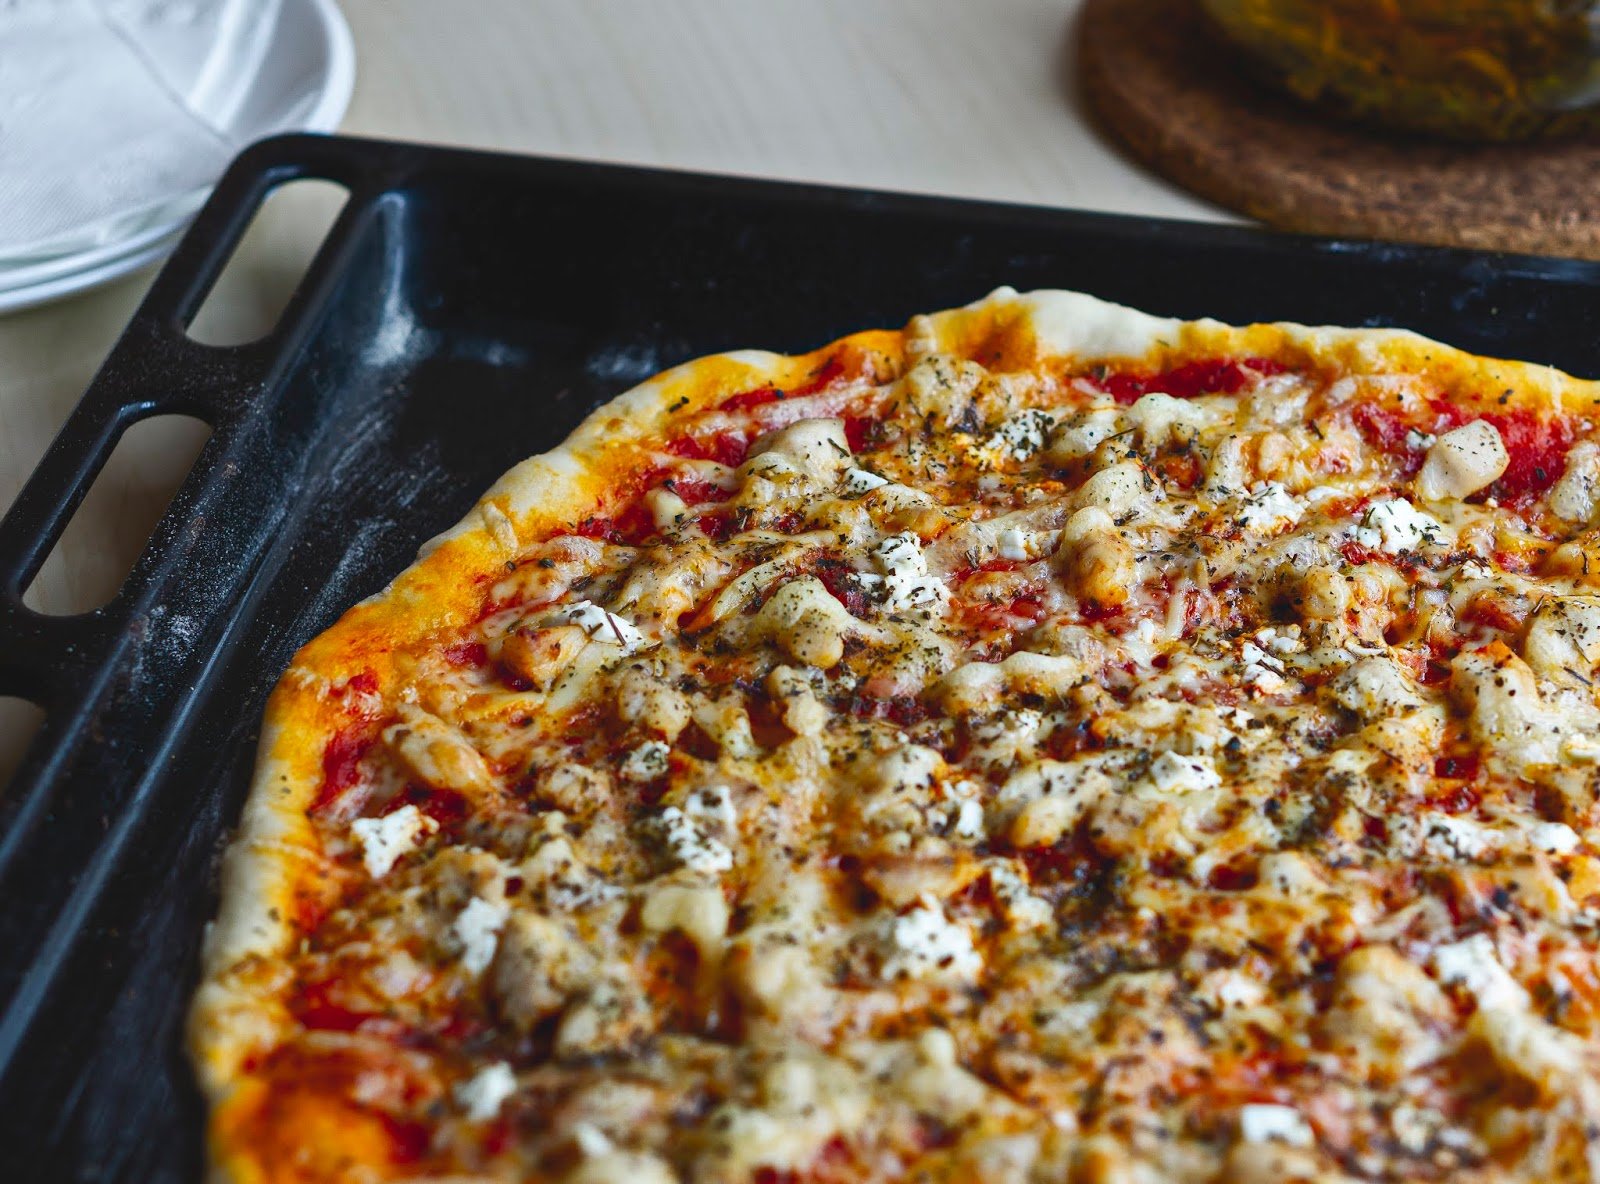 Домашняя пицца в духовке рецепт начинки. Огромная пицца. Гигантская пицца. Пицца домашняя в духовке. Домашняя пицца на тонком тесте.